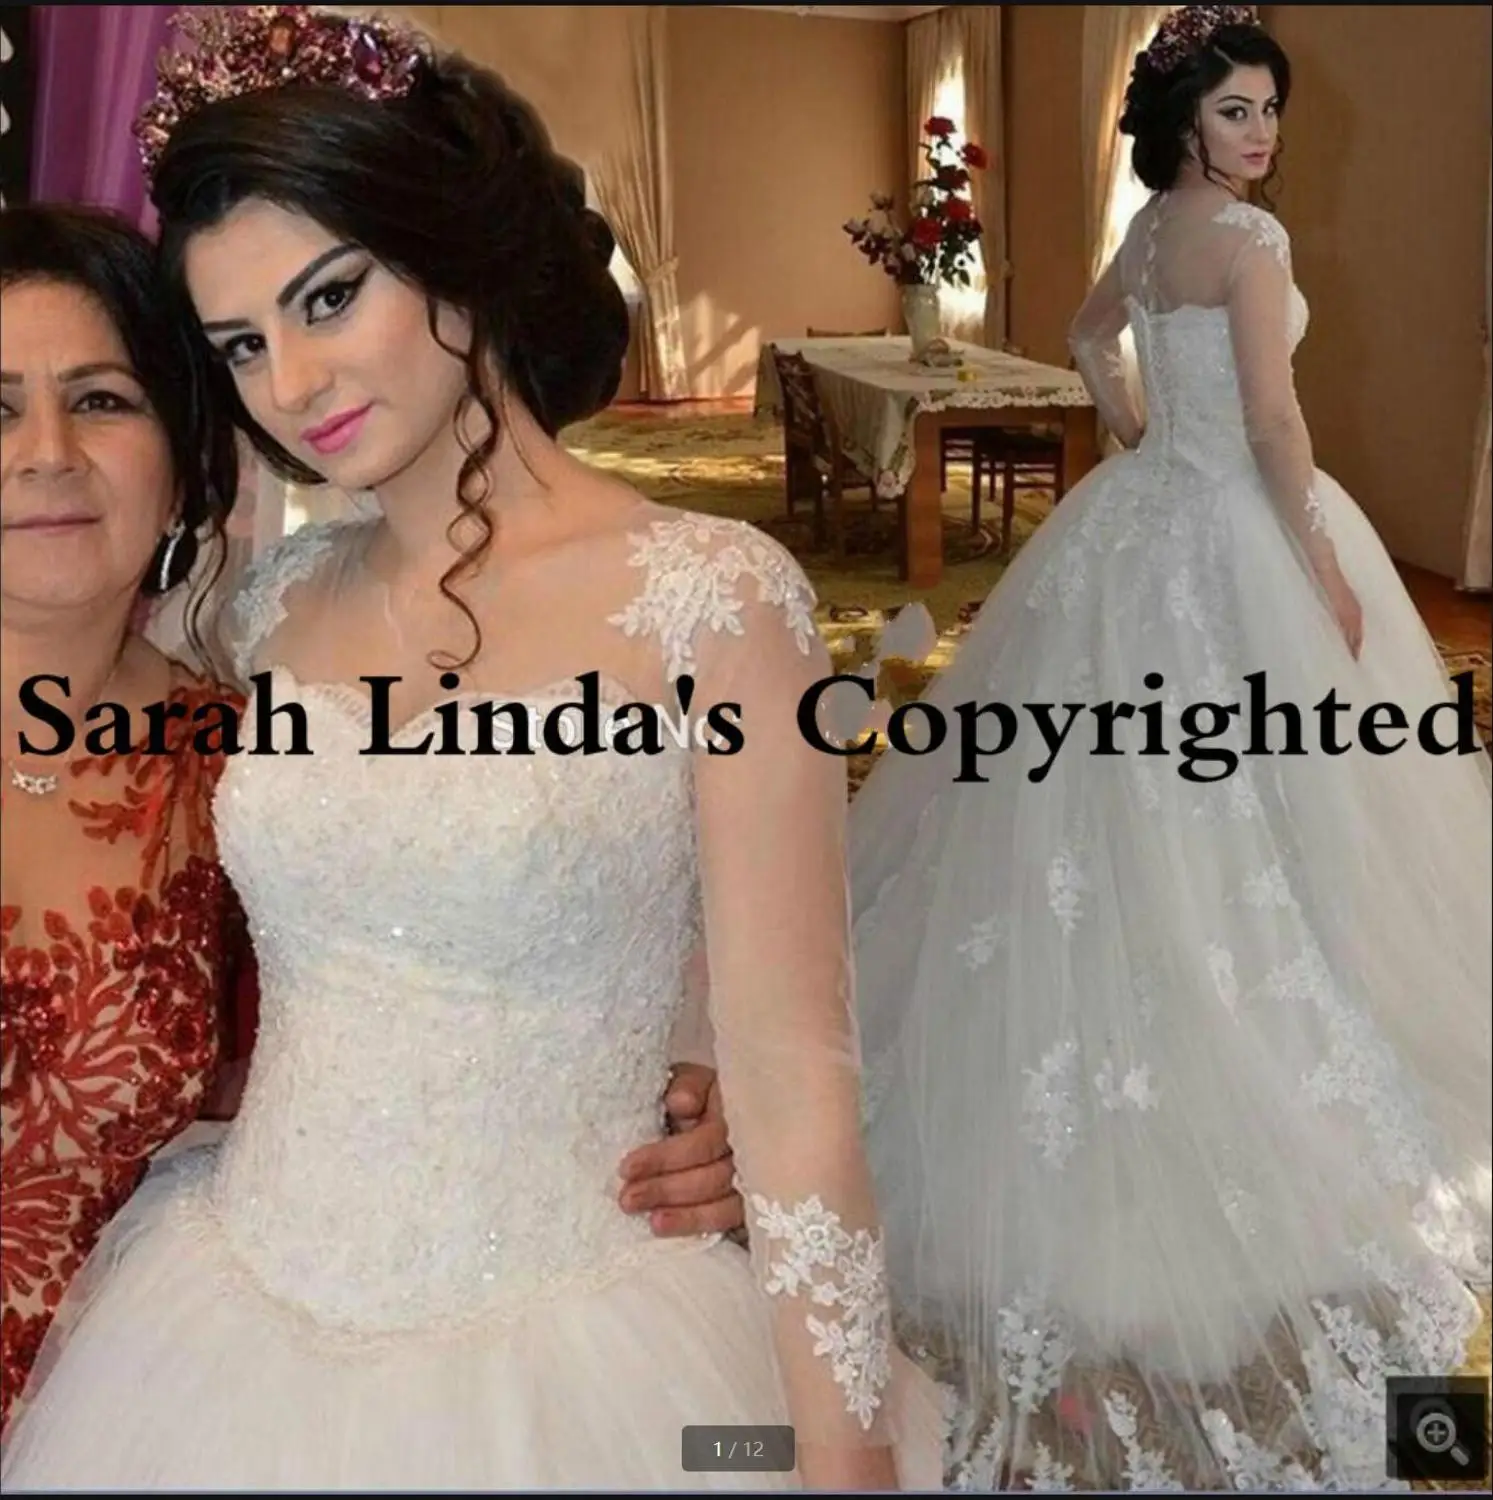 

2020 Vestido De Noiva ball gown long sleeve wedding dress lace appliques beading sequined wedding gowns modest muslim bride gown